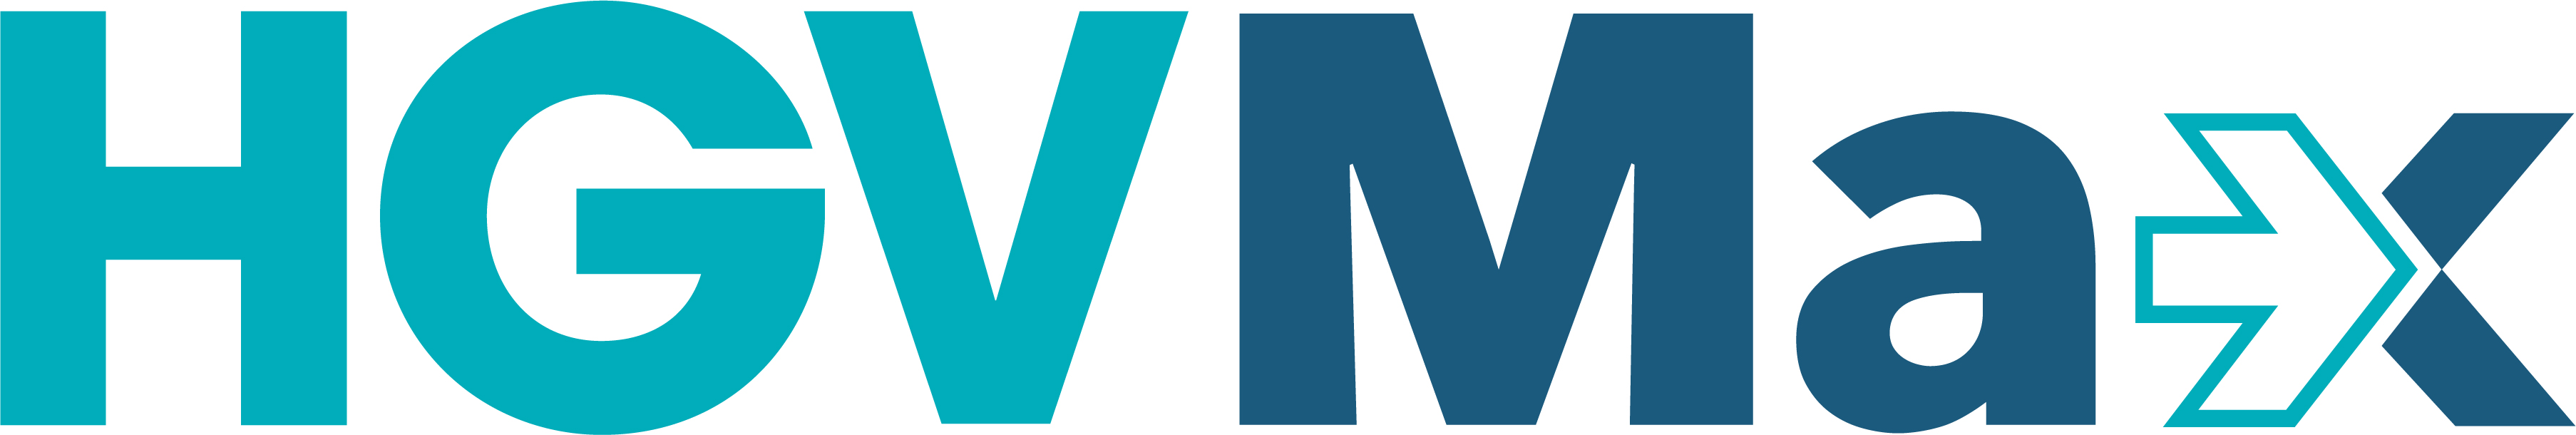 HGV Max logo